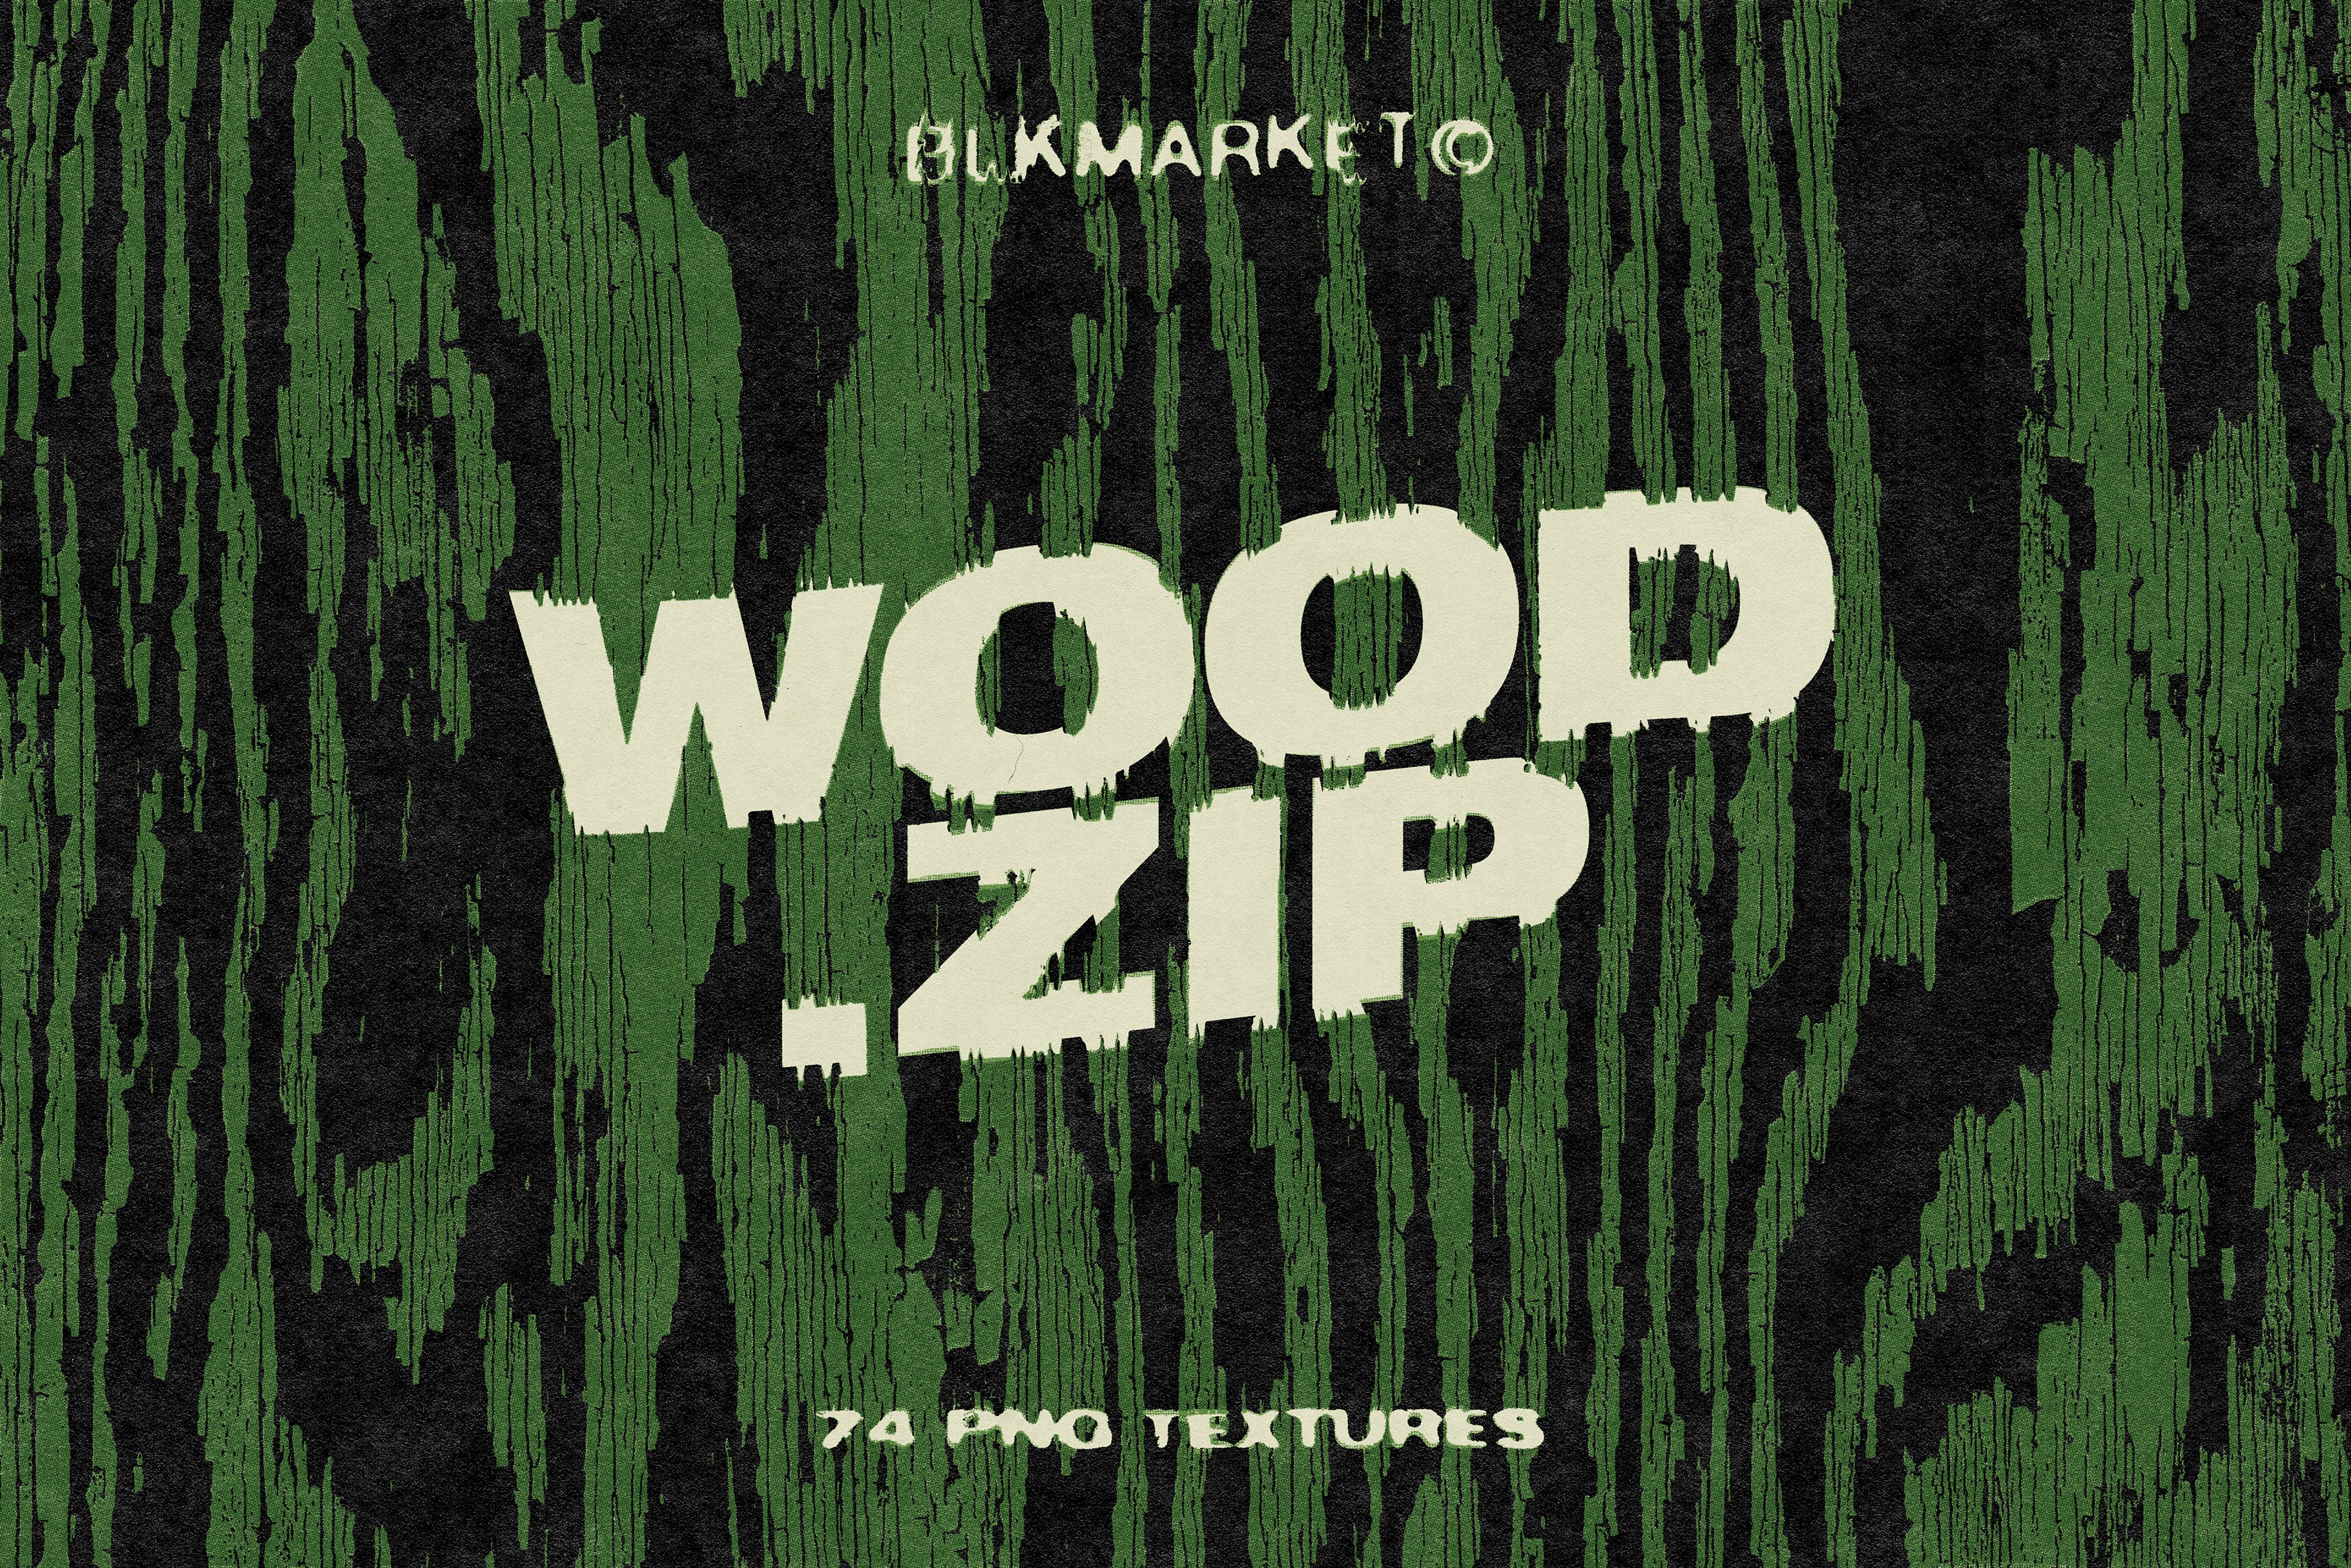 Wood.zip cover image.